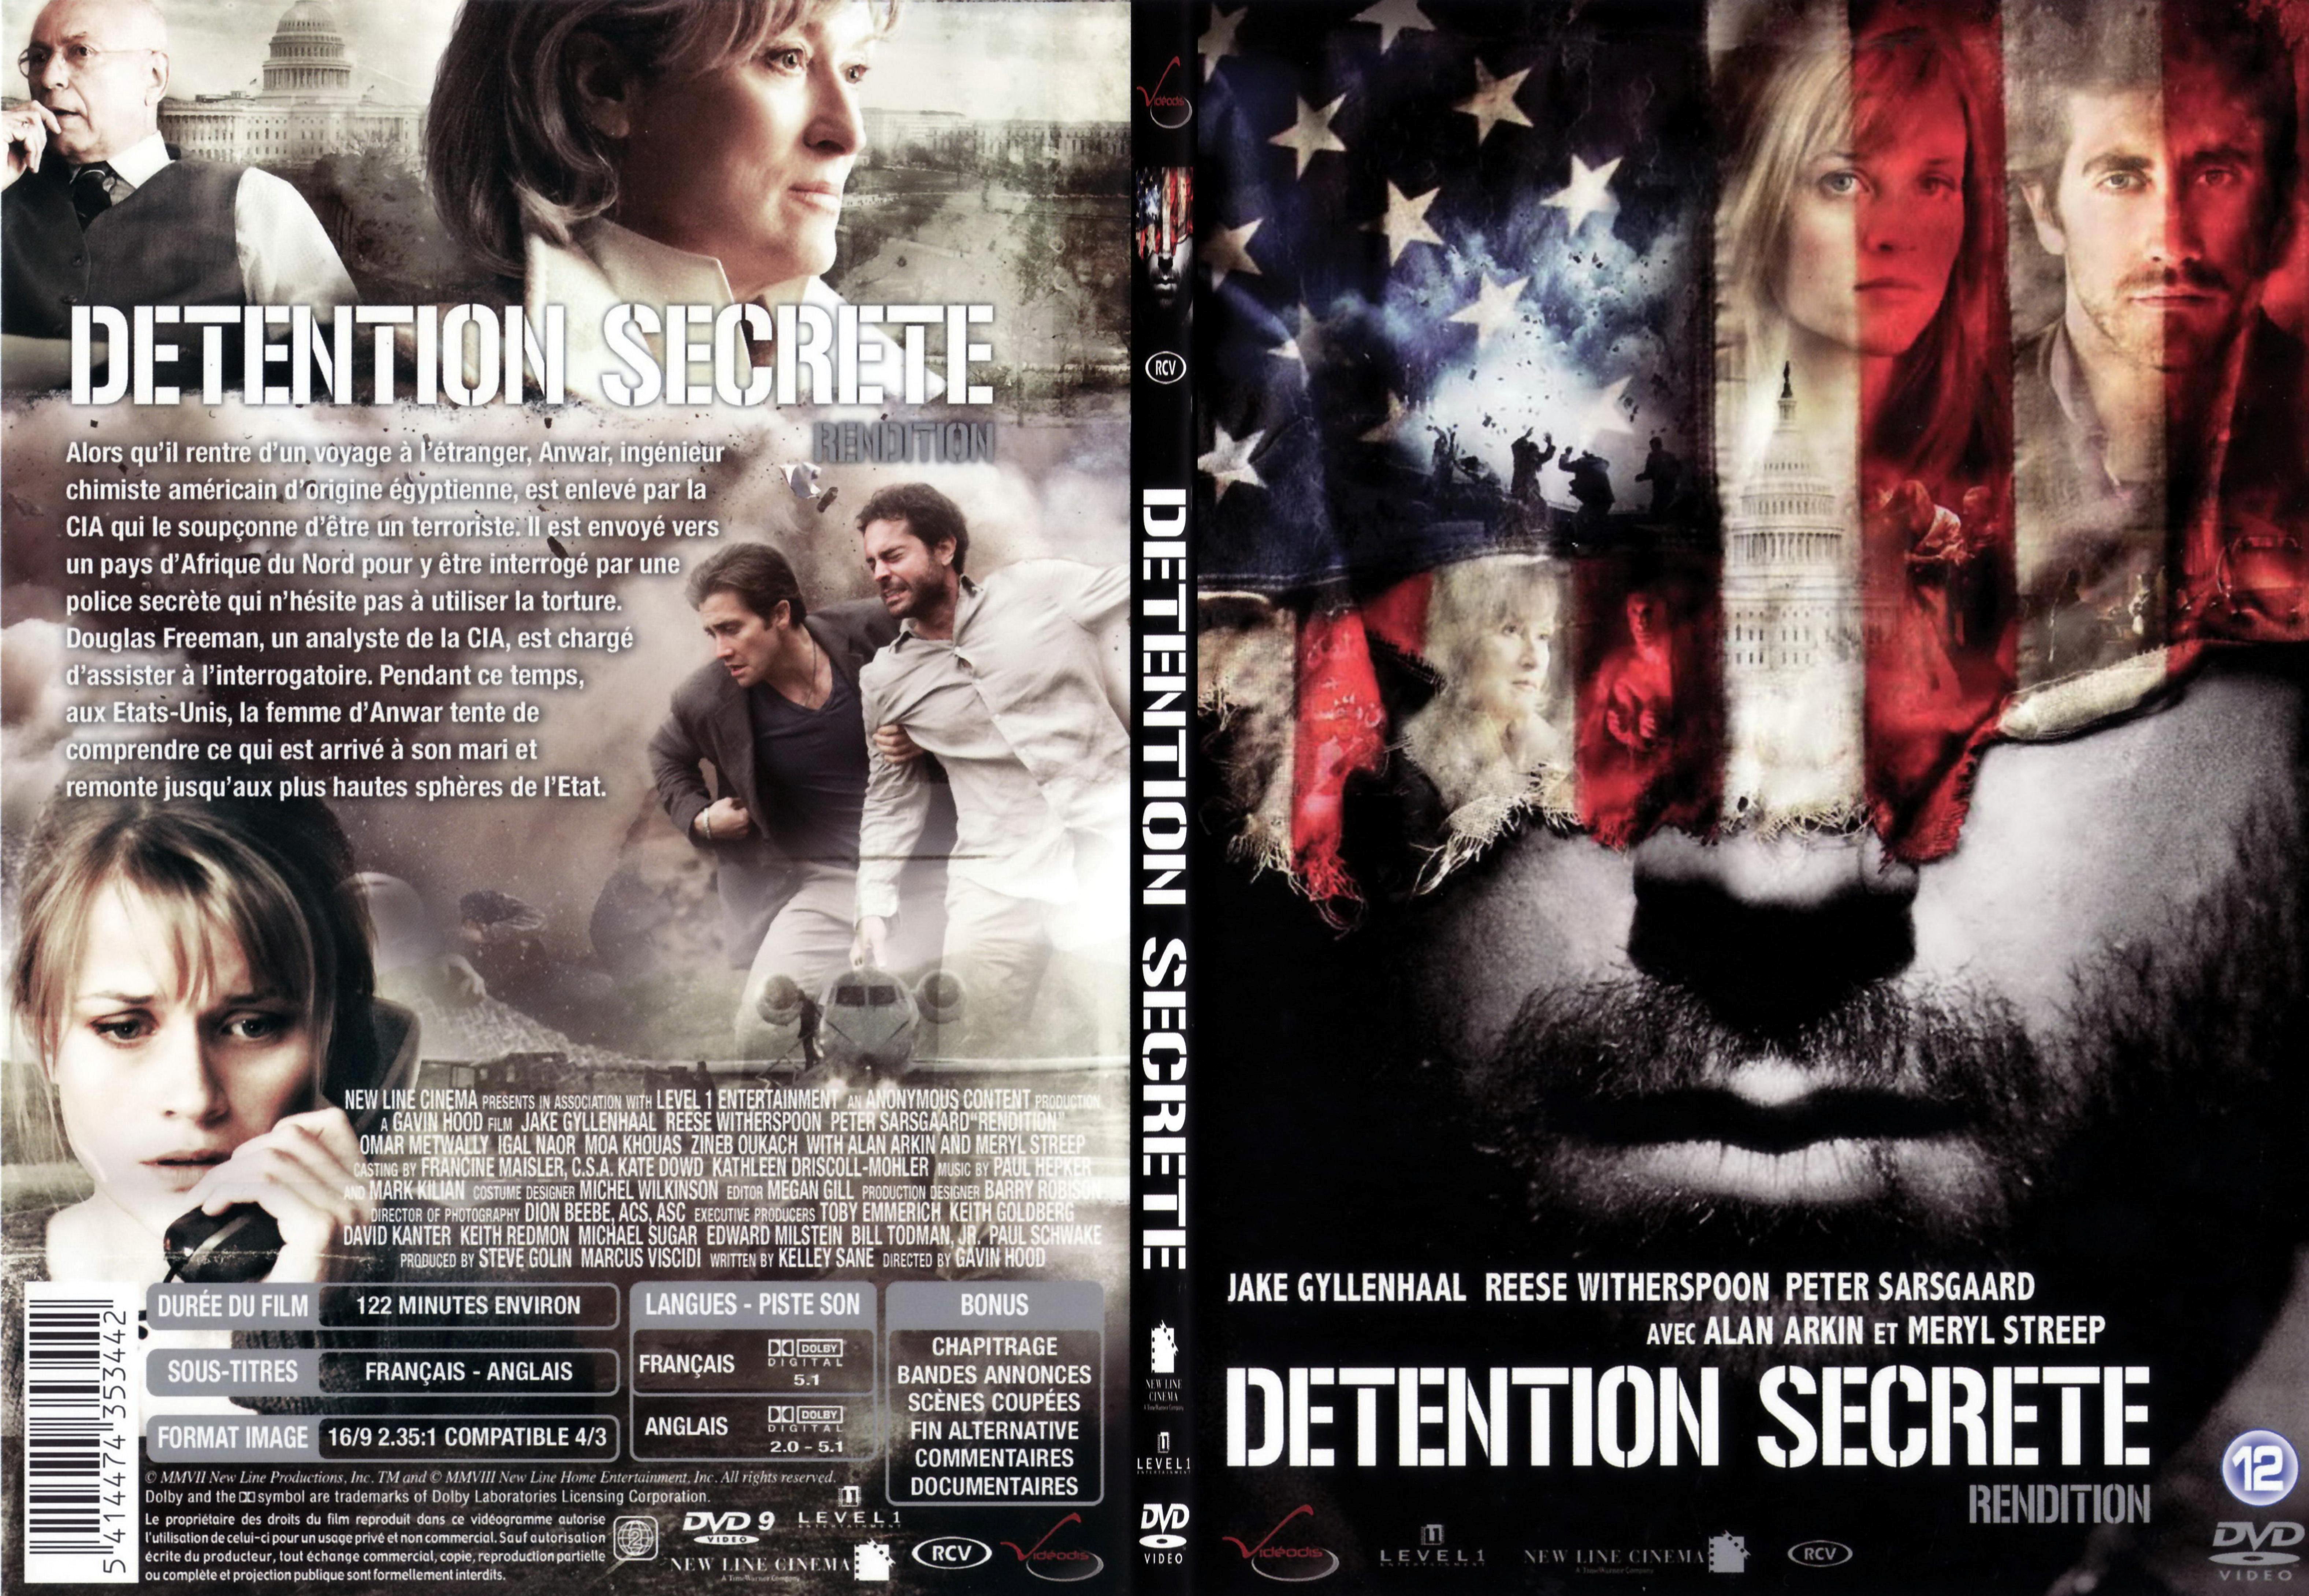 Jaquette DVD Detention secrete - SLIM v2